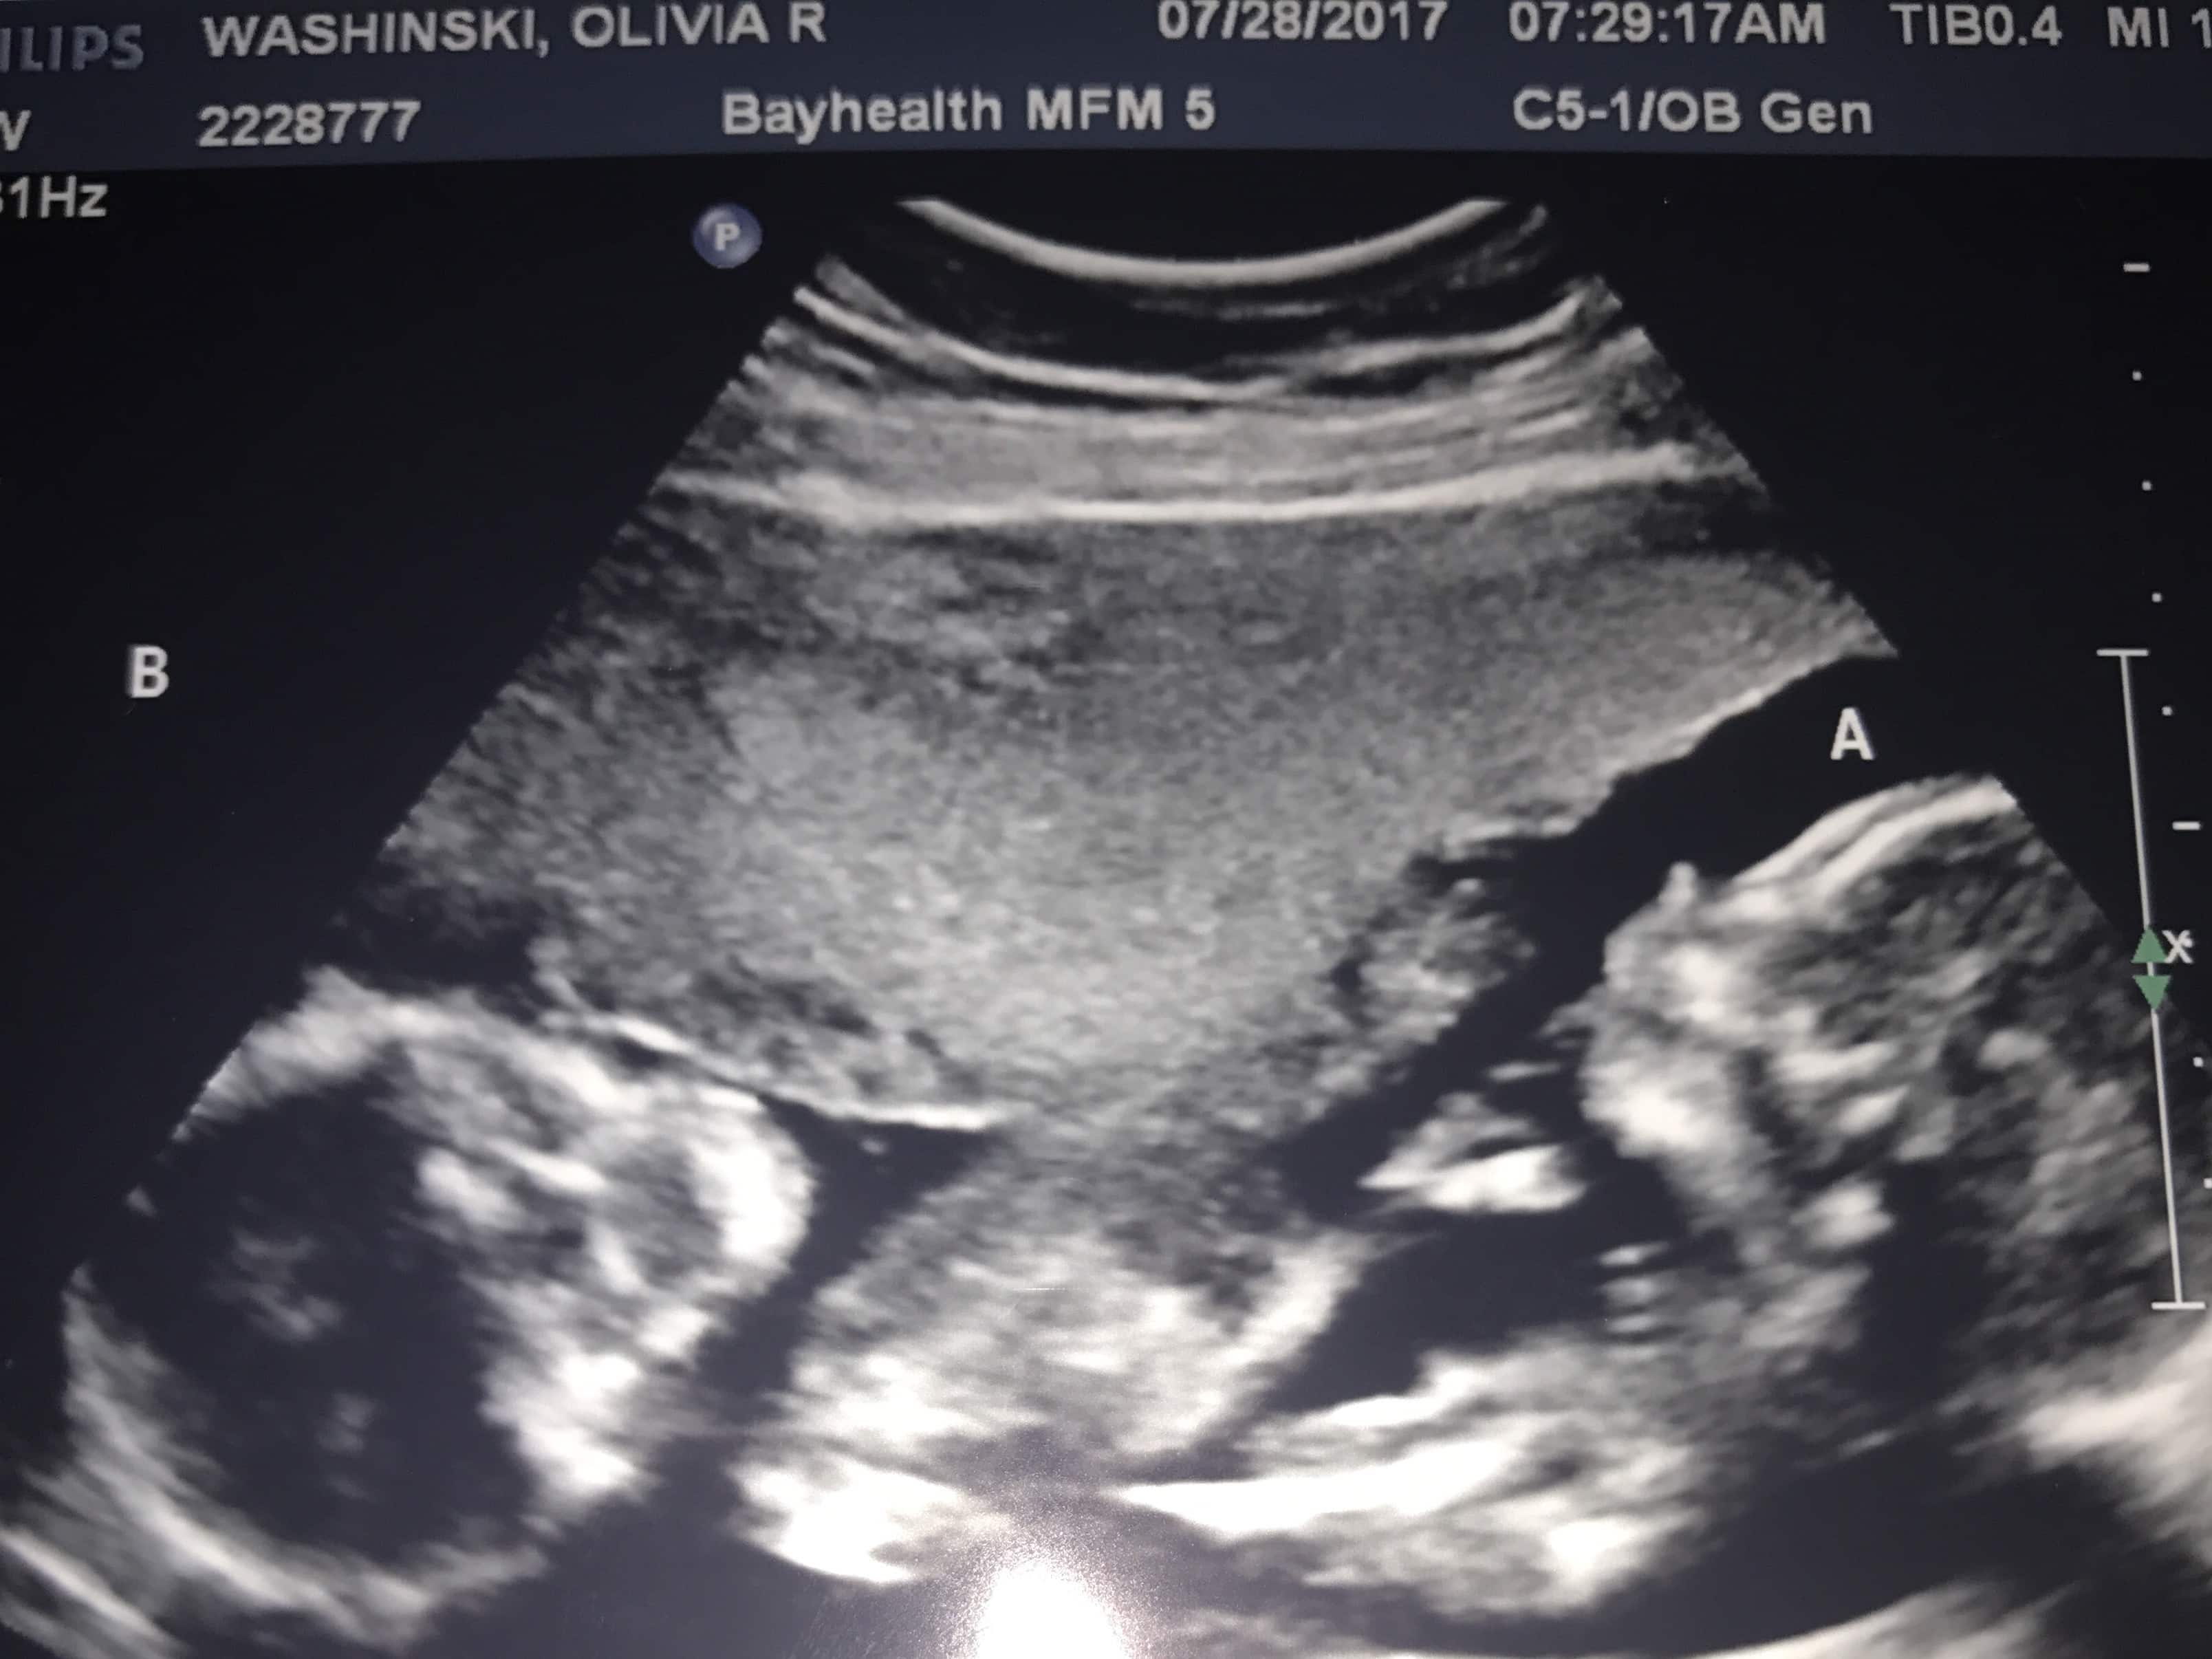 20 weeks ultrasound twins